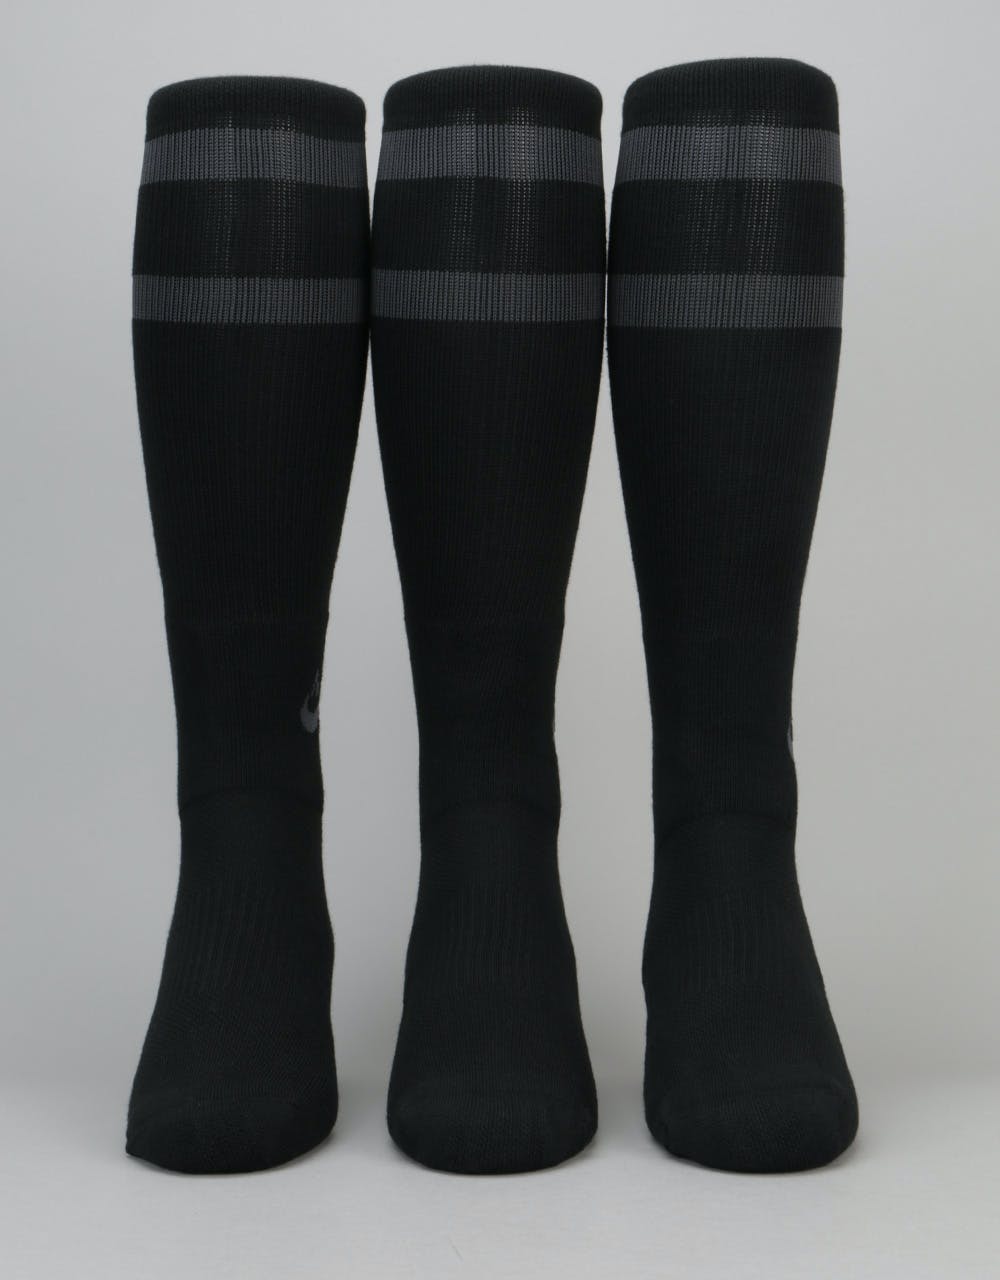 Nike SB Crew Socks 3 Pack - Black/Anthracite